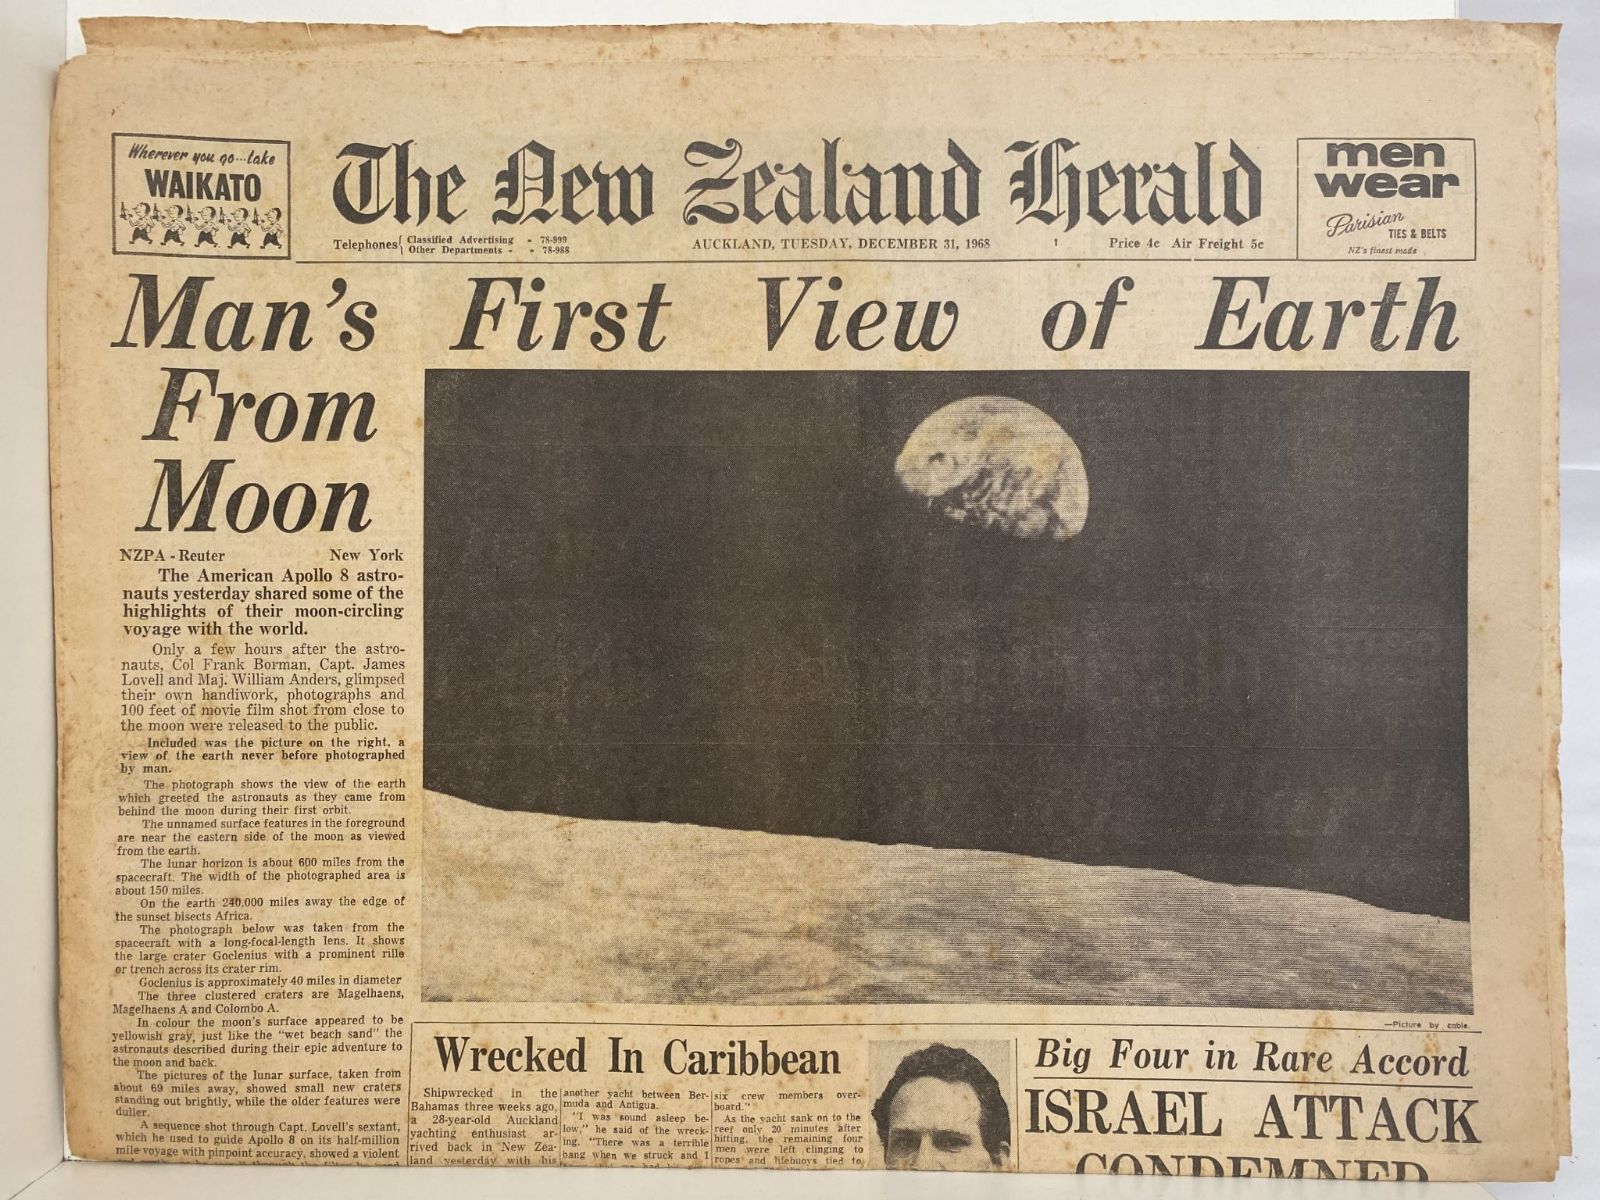 OLD NEWSPAPER: The New Zealand Herald, 31 December 1968 - Moon Landing Special